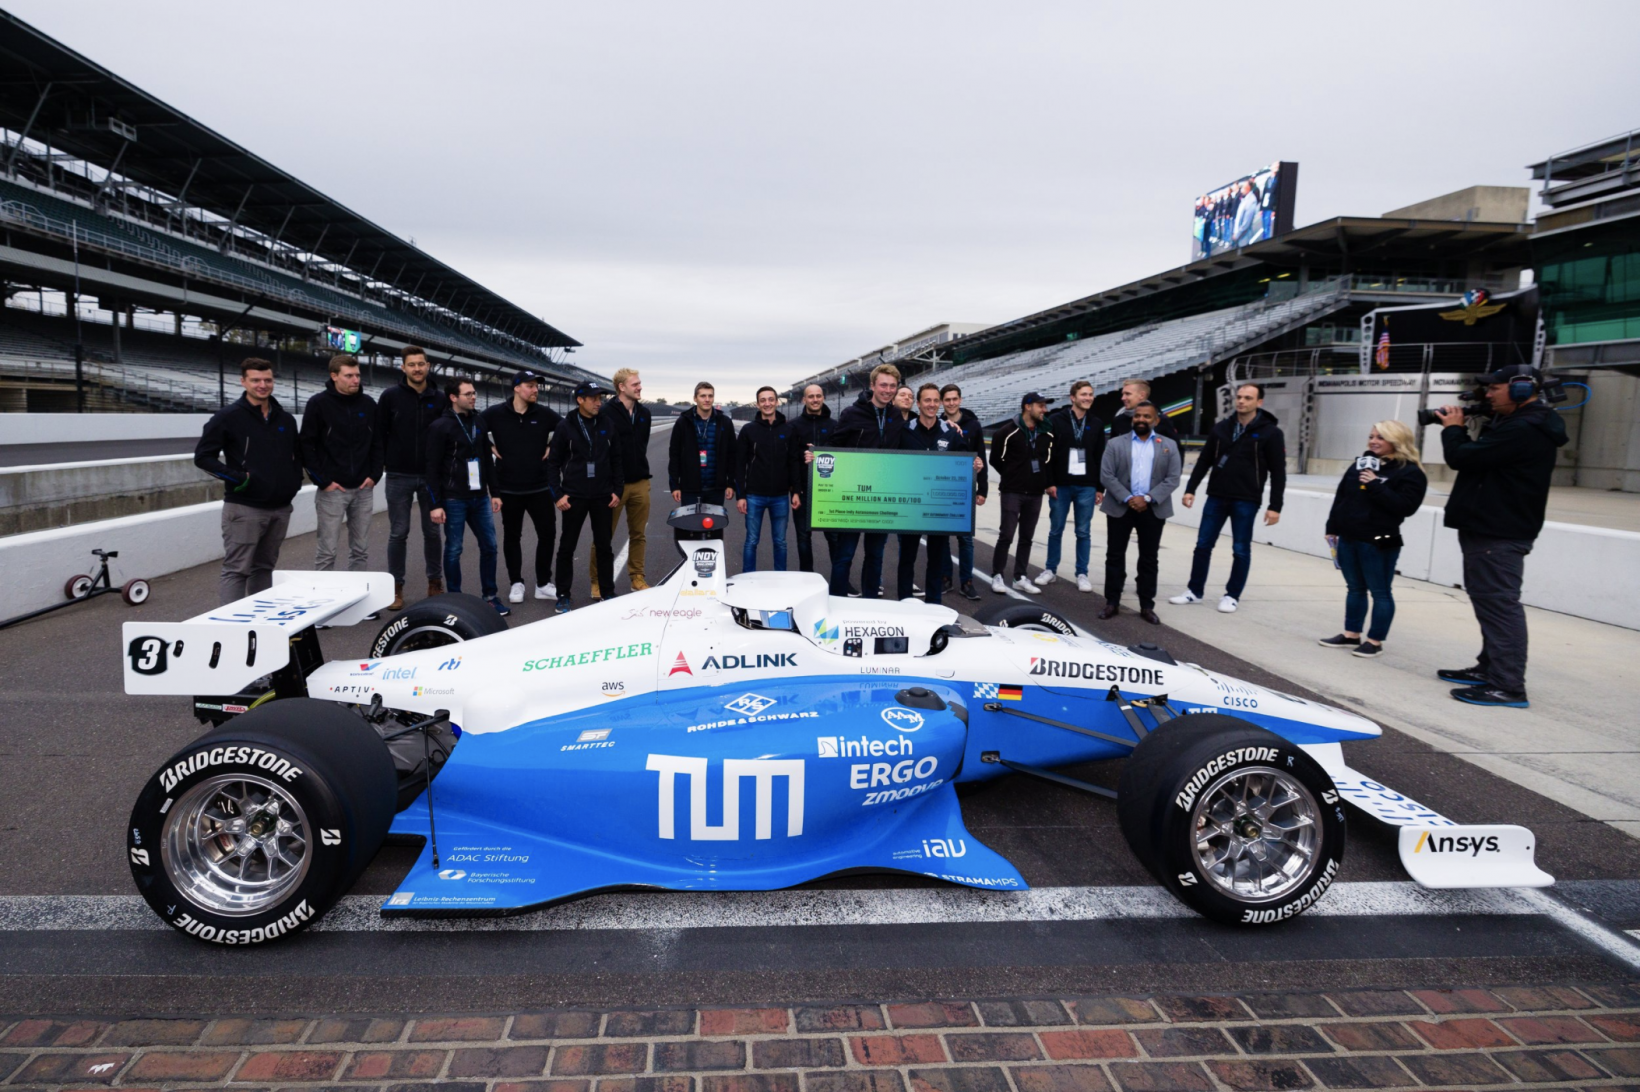 TUM Autonomous Motorsport de la Technische Universität München (TUM) ganó el gran premio de $ 1 millón